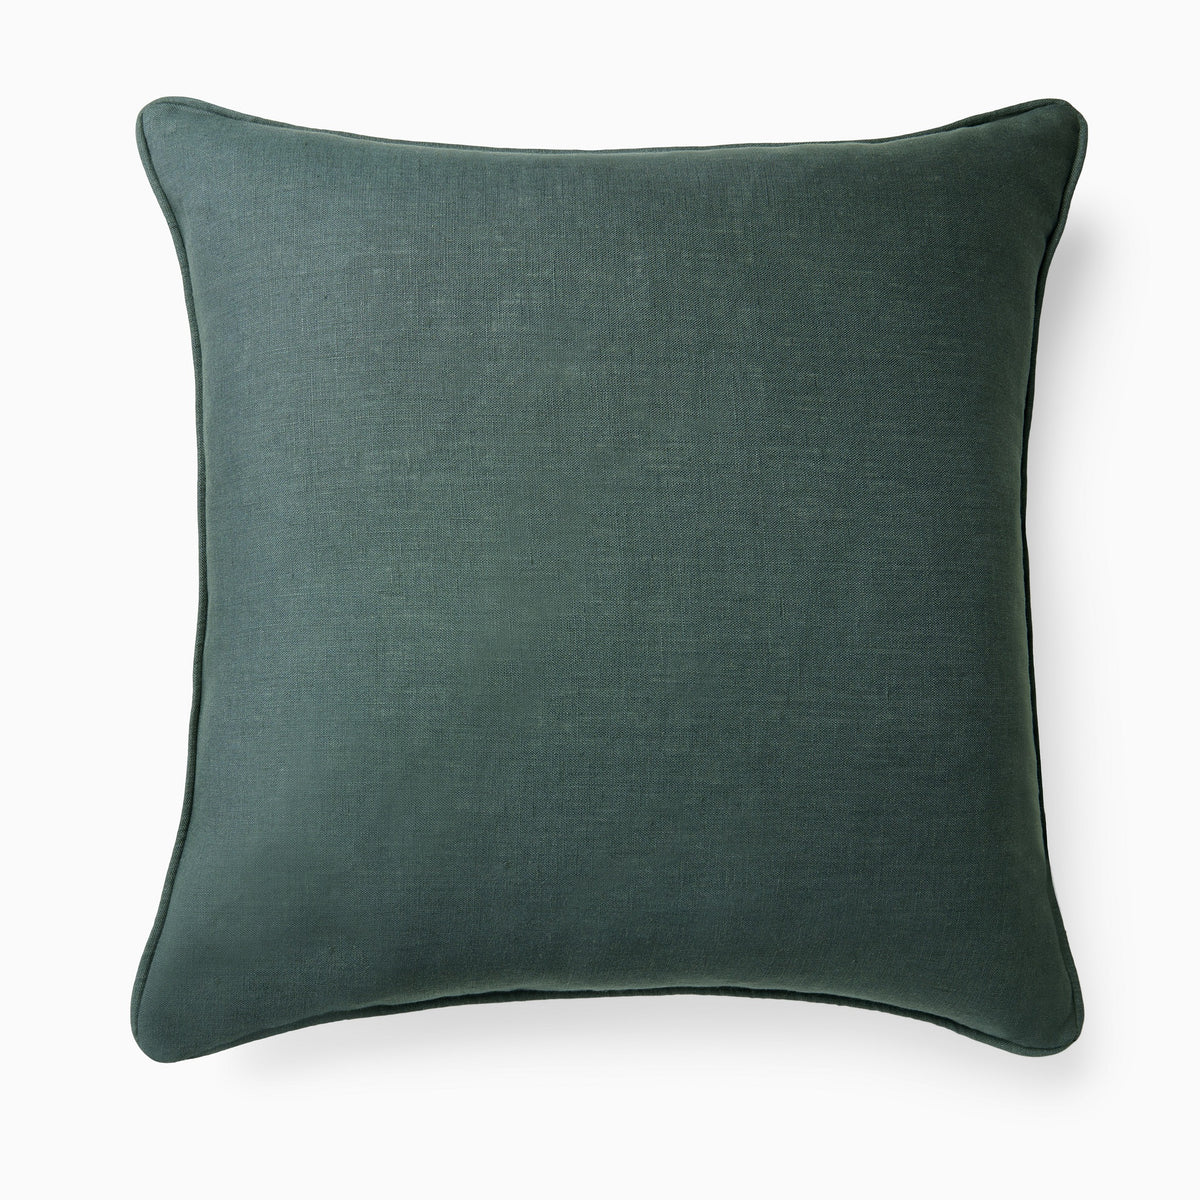 Clear Image of Sferra Manarola Decorative Pillow in Curry/Indigo Back